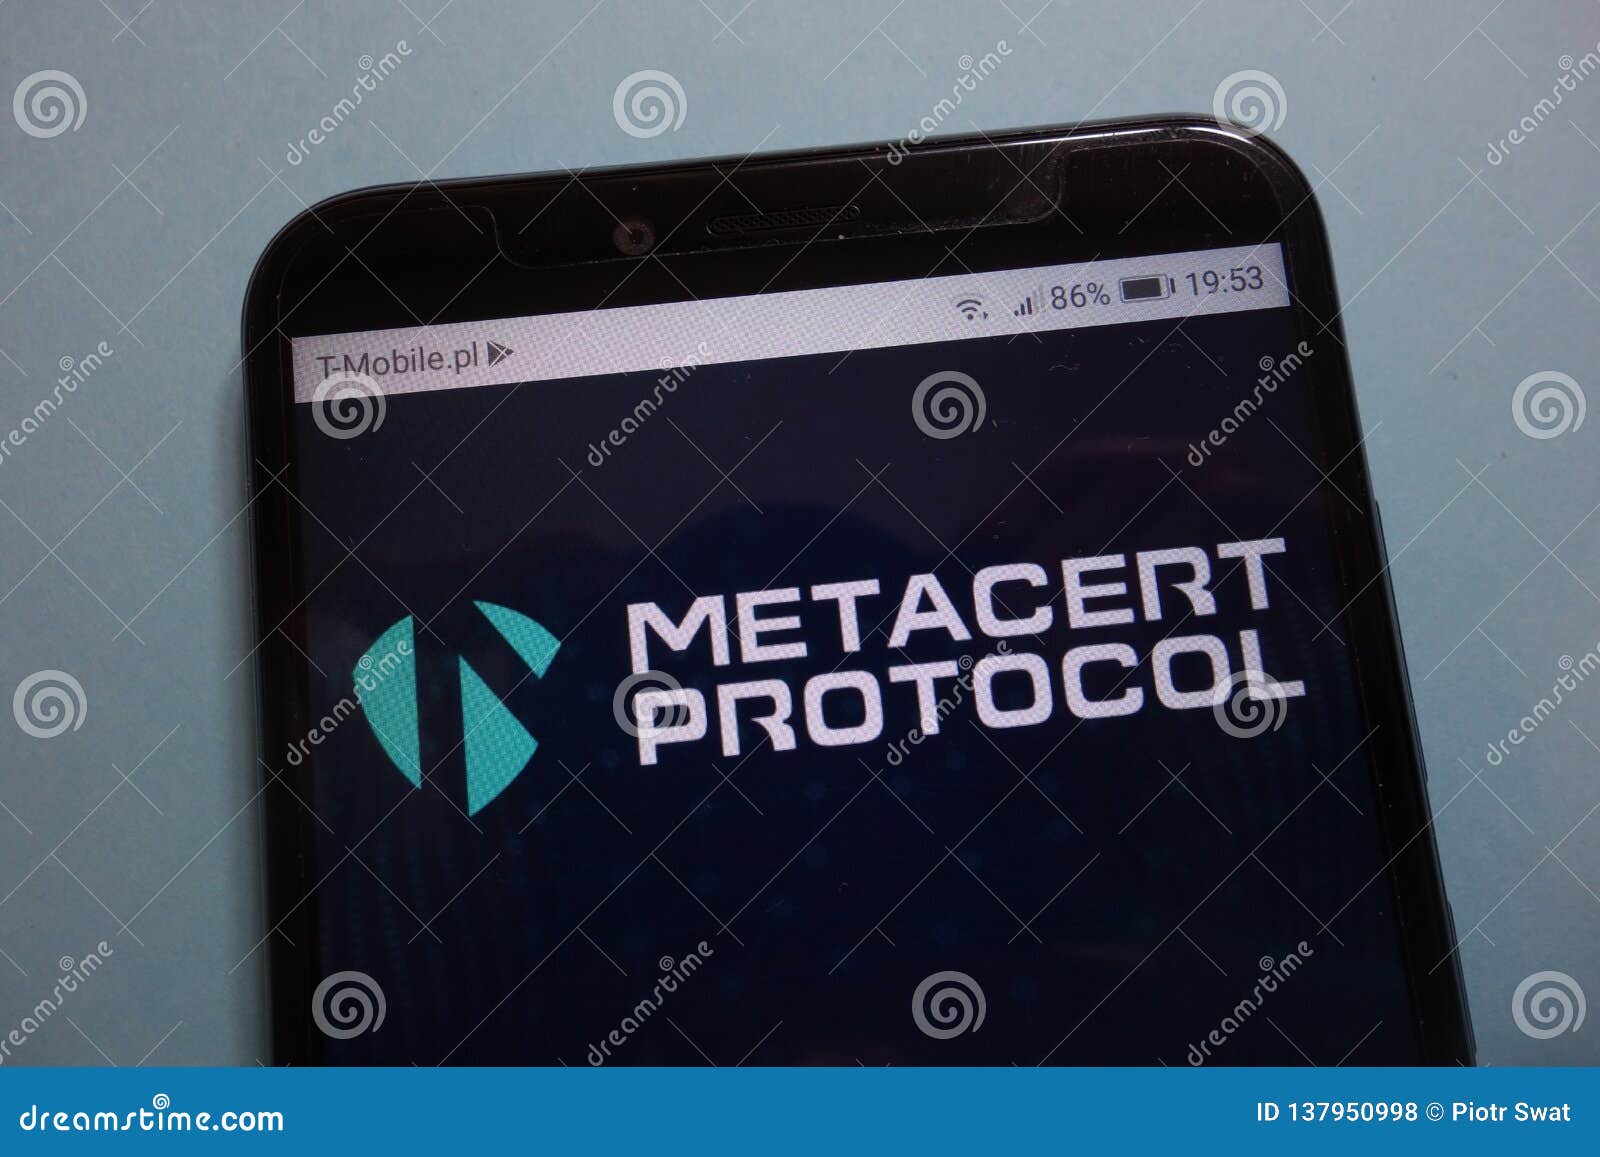 MetaCert Protocol META Cryptocurrency Logo on Smartphone Editorial